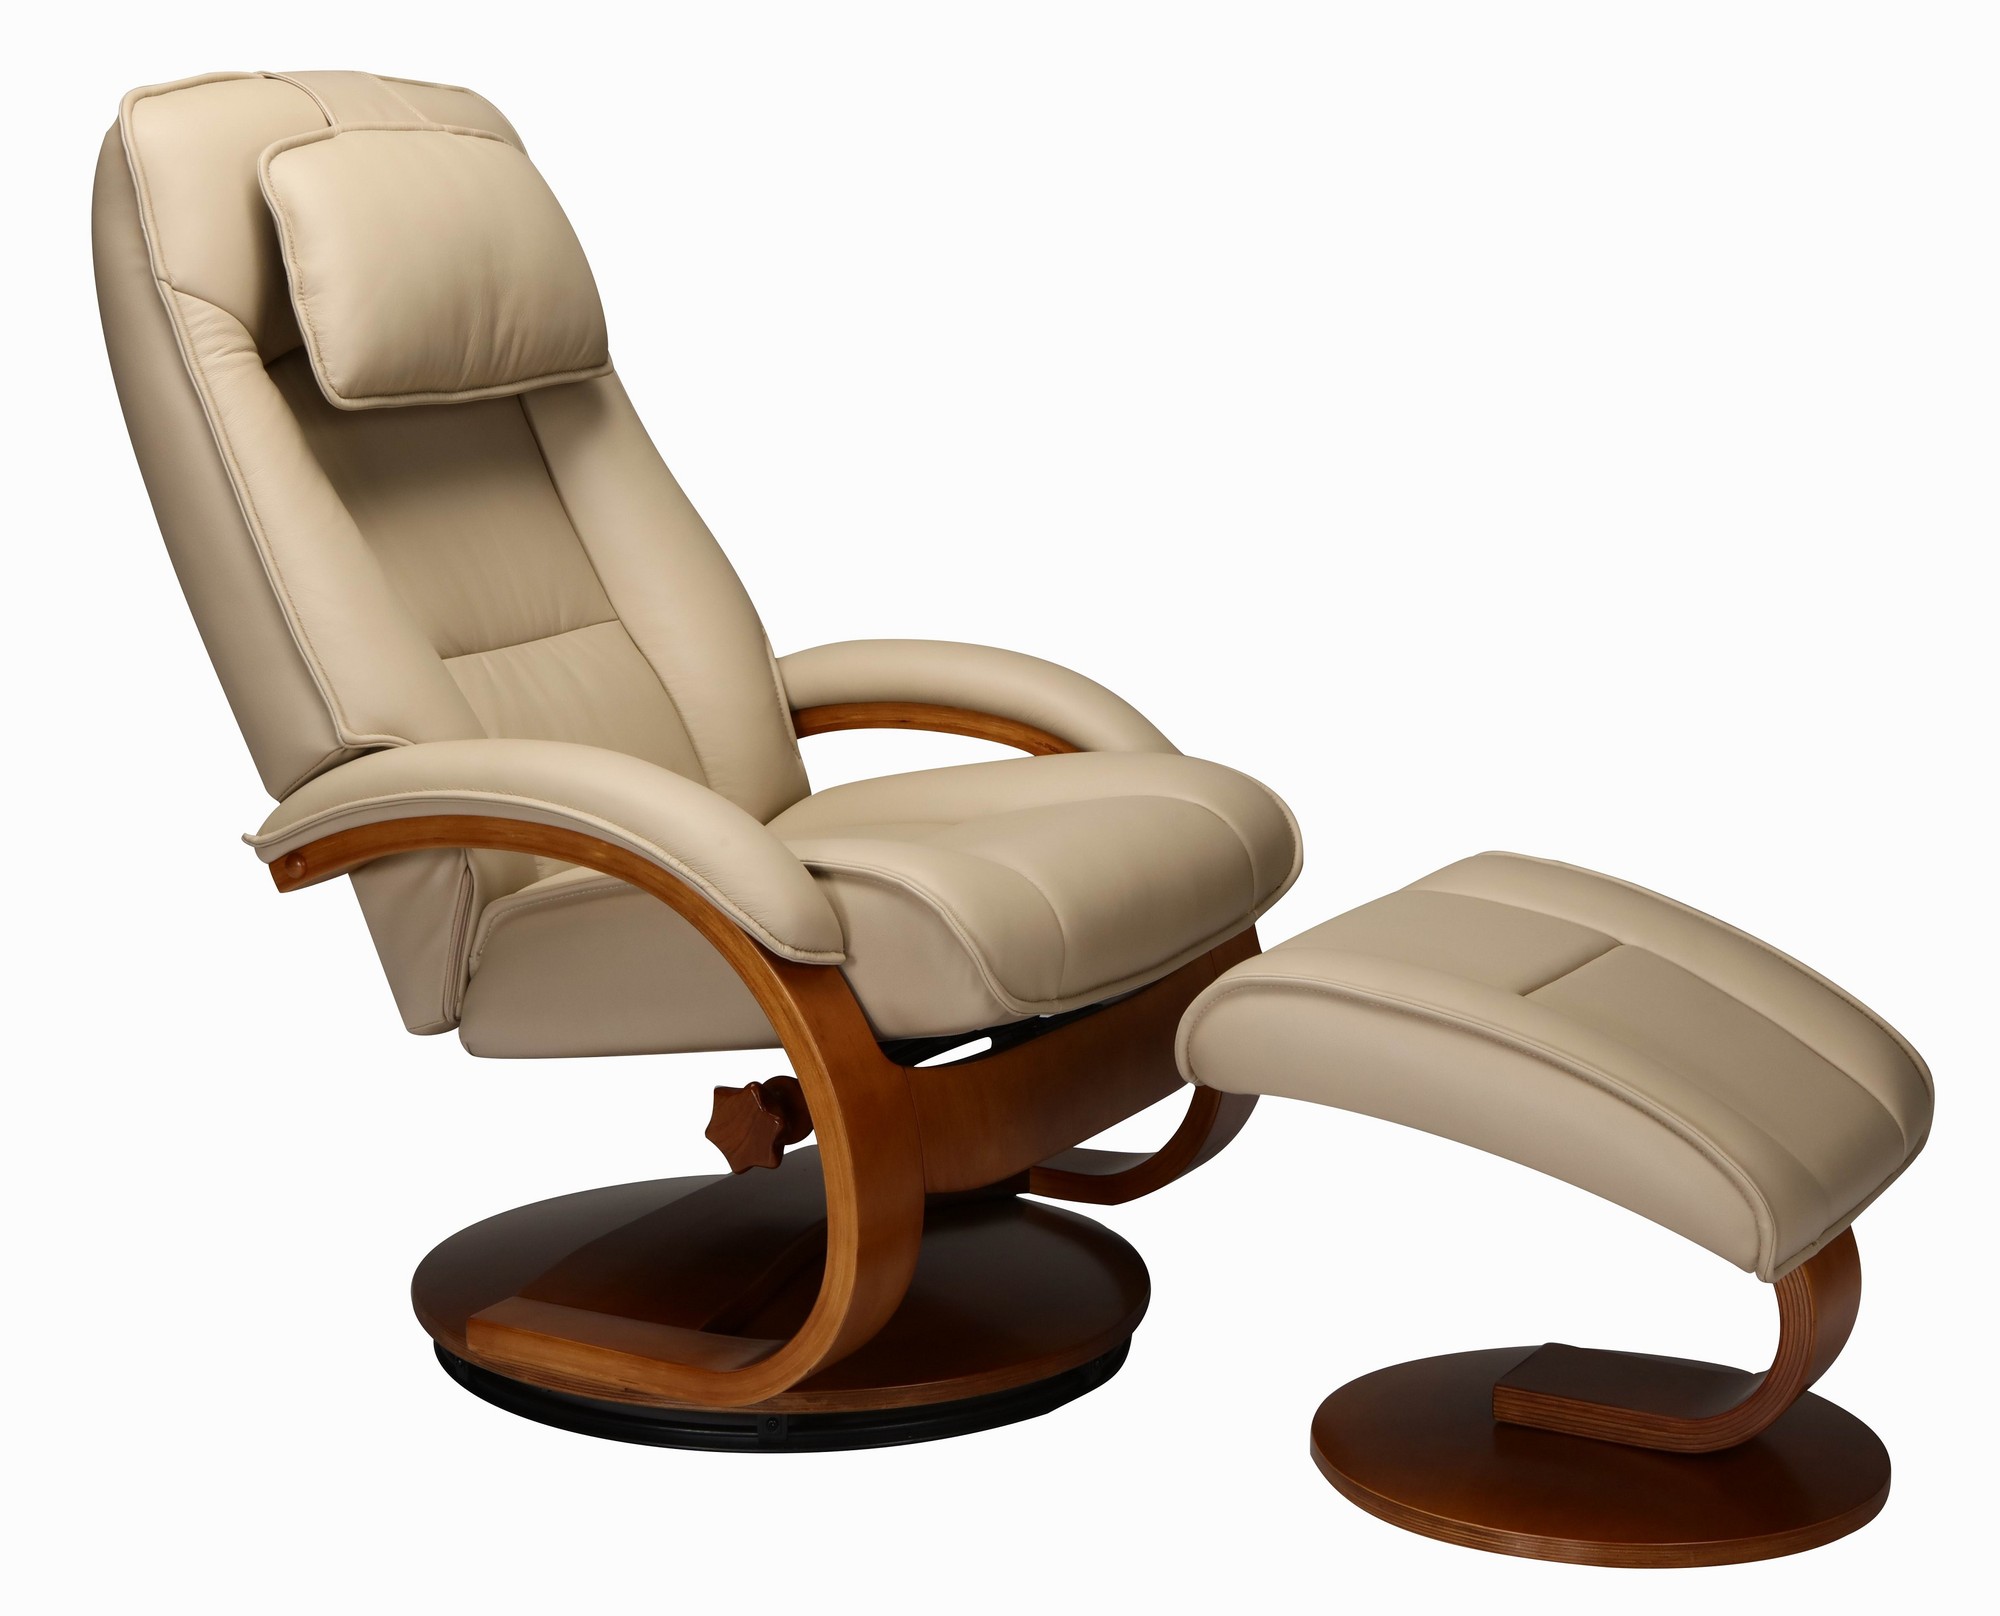 Cobblestone Tan Top Grain Leather Recliner chair and Ottoman